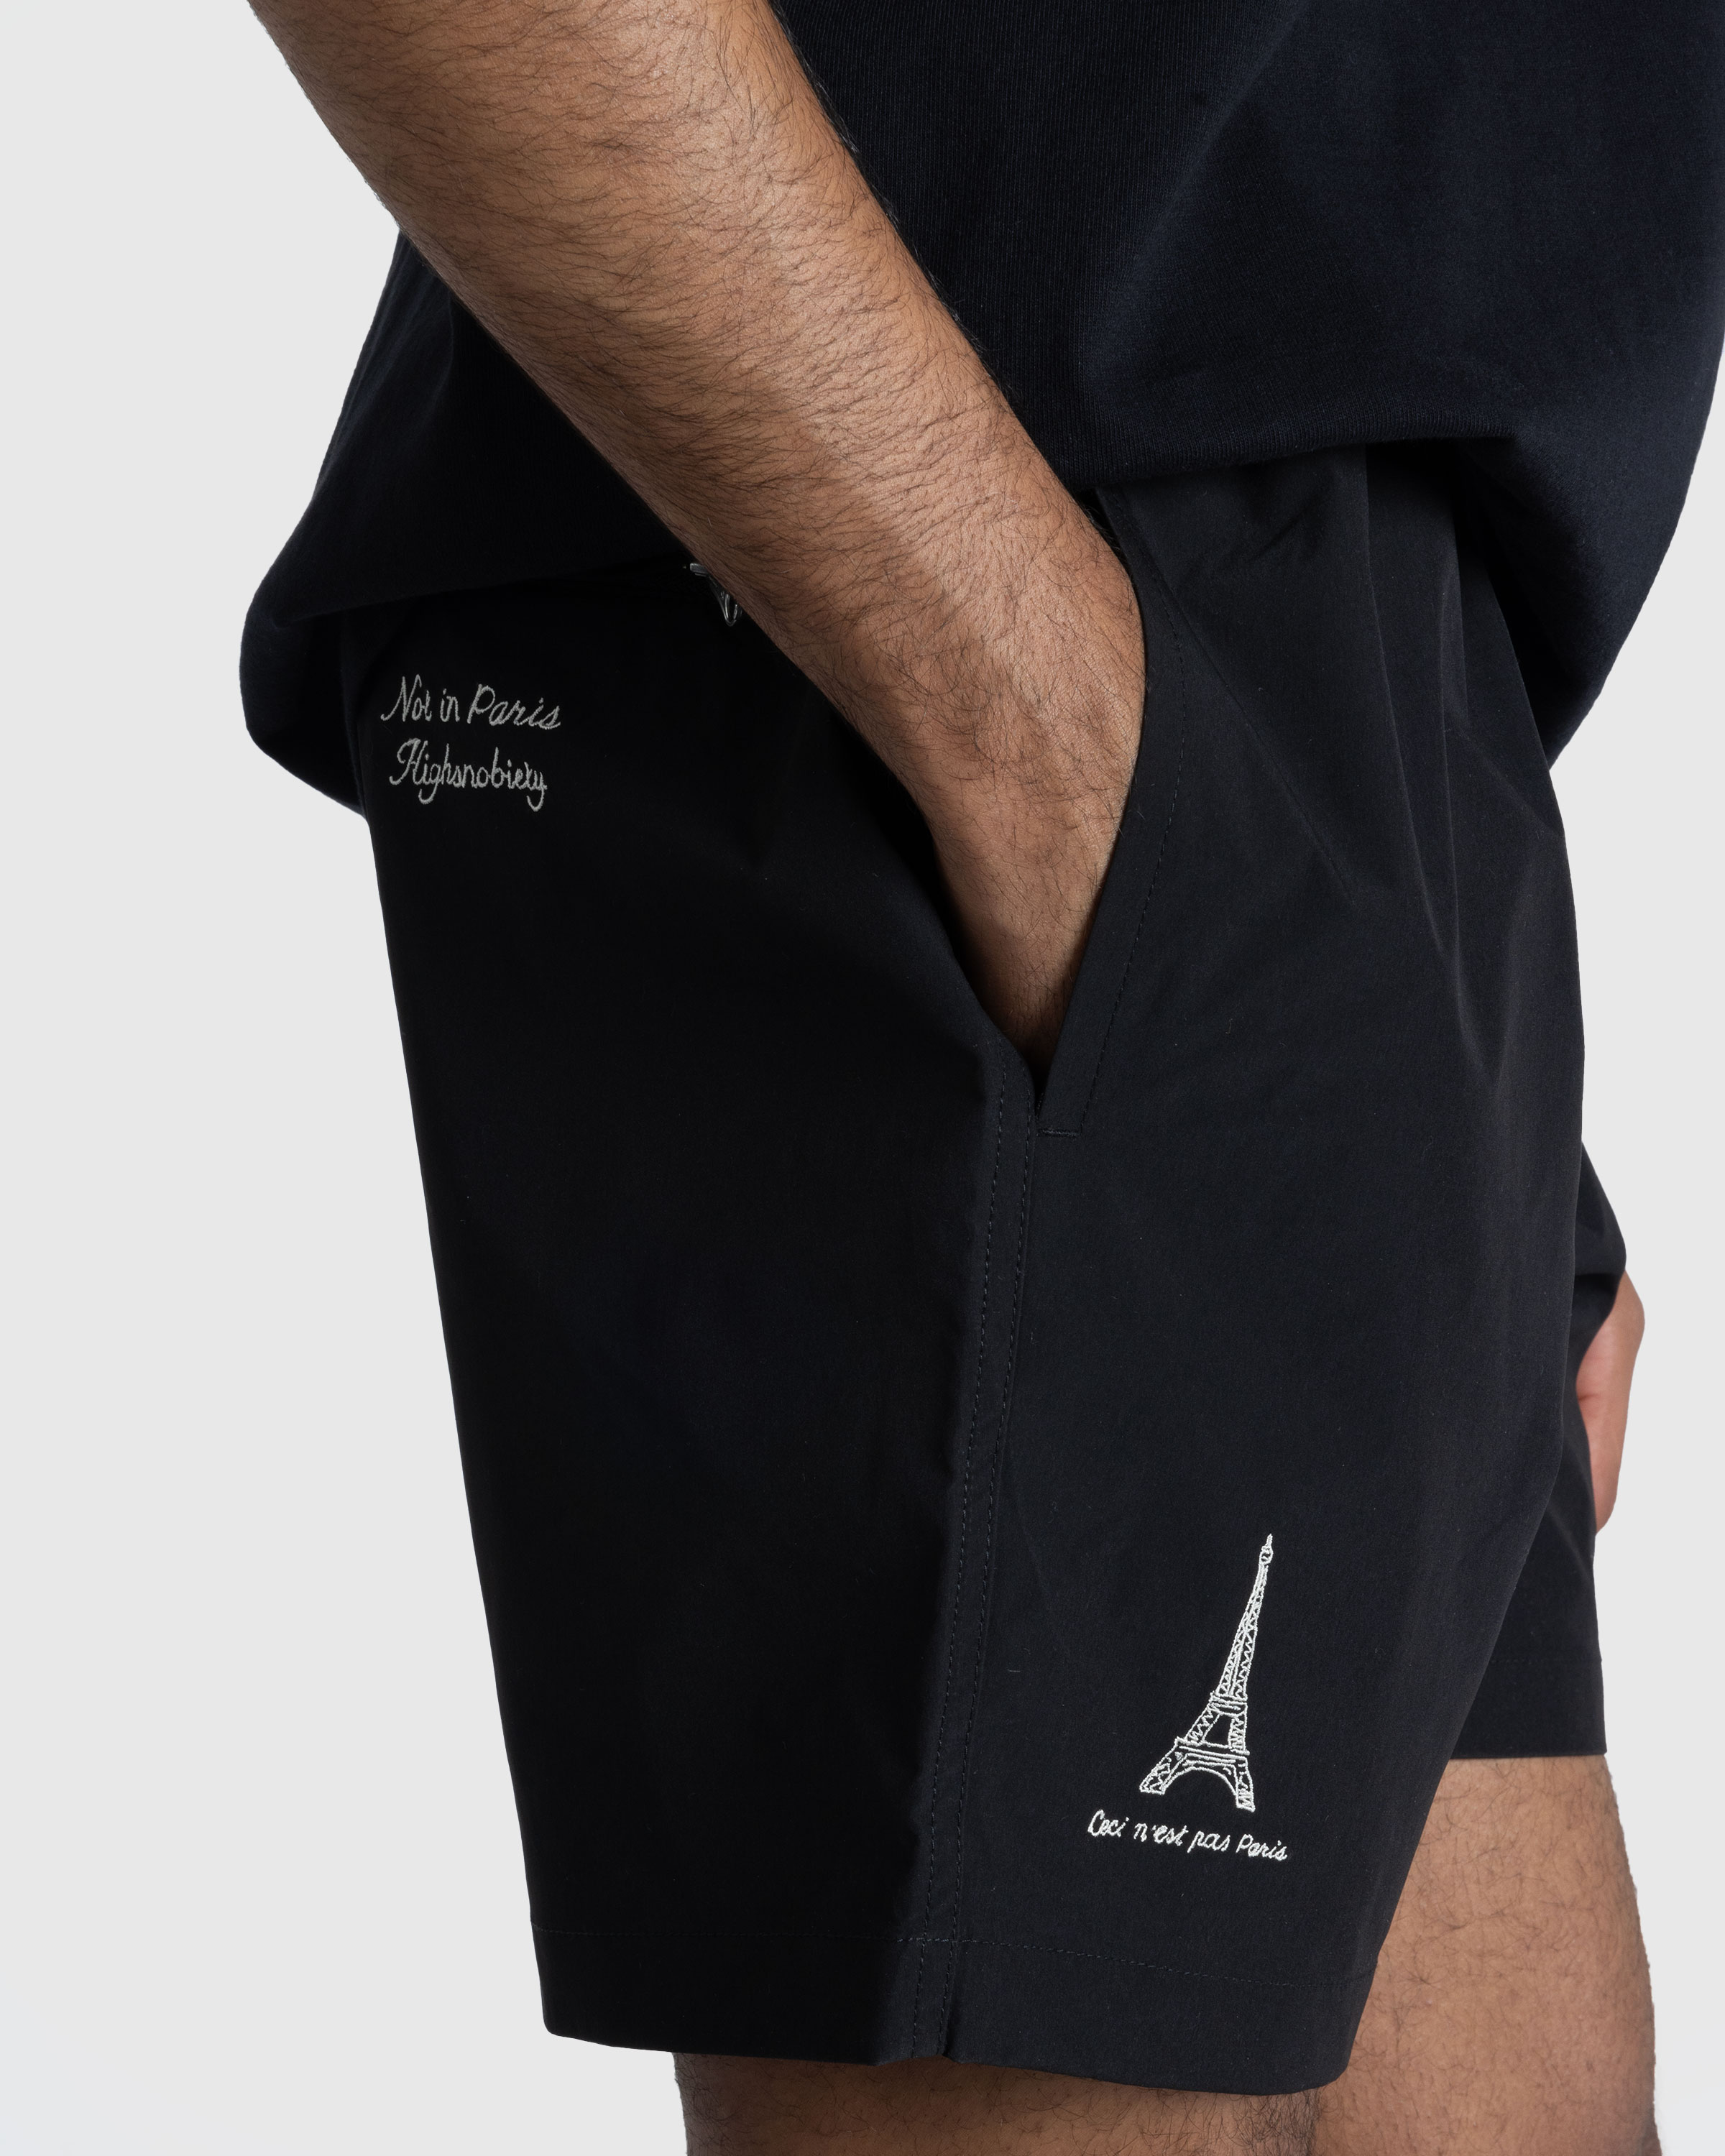 Highsnobiety – Not In Paris Nylon Shorts Black  - Bermuda Cuts - Black - Image 6